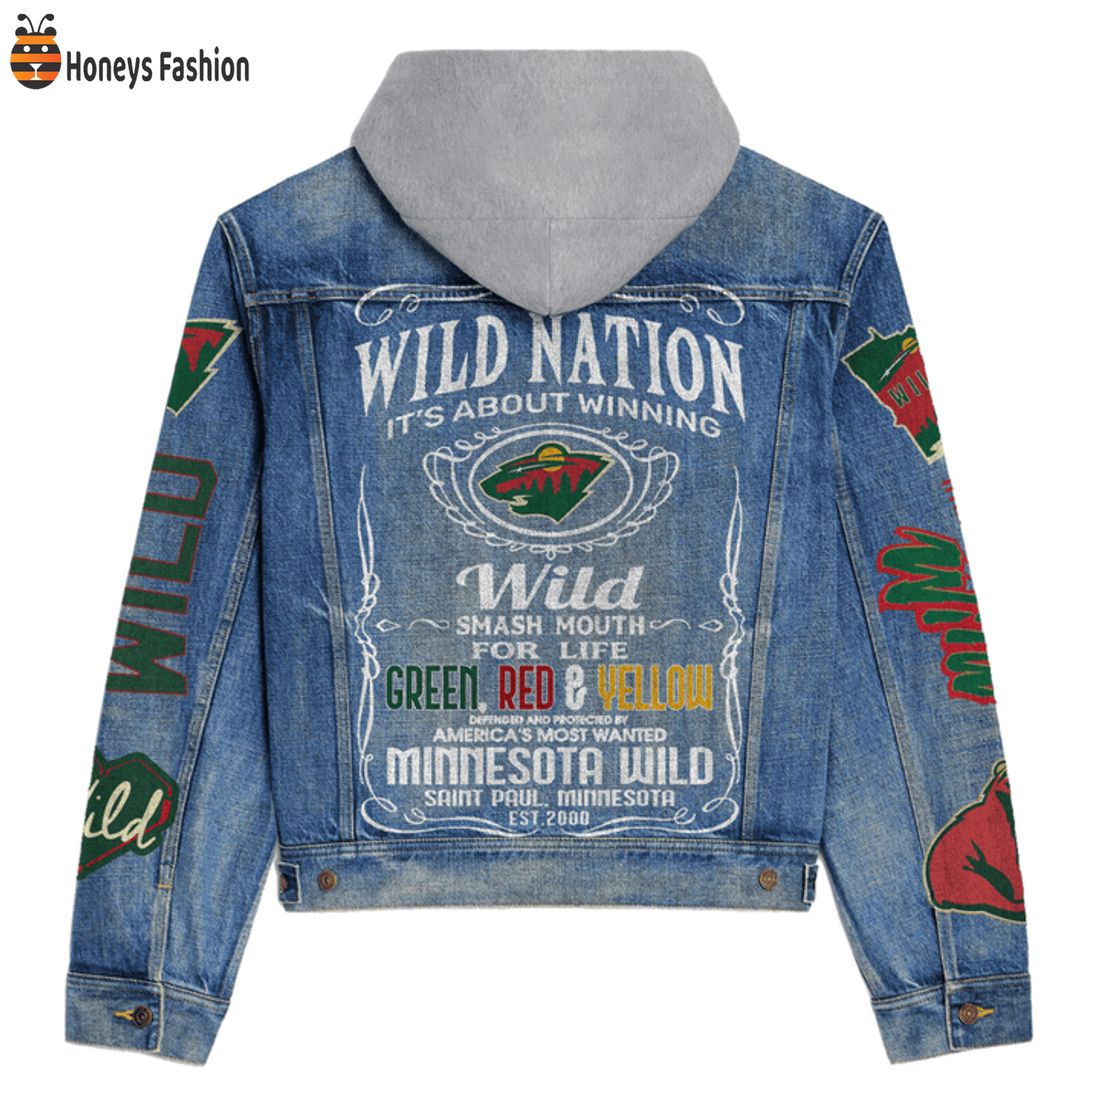 NEW Minnesota Wild Nation It’s About Winning Hooded Denim Jacket